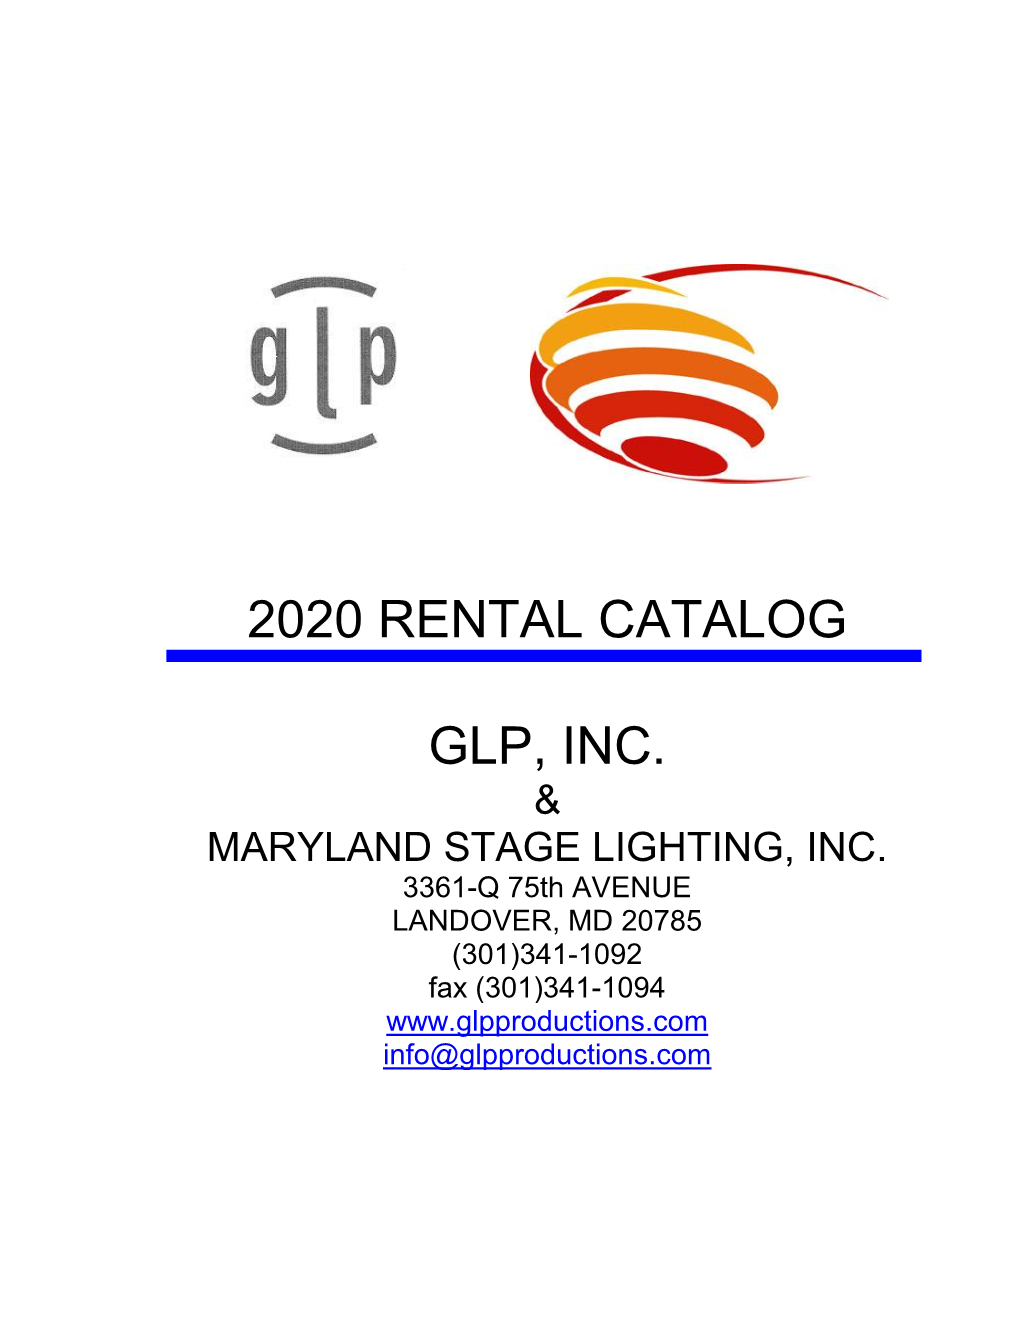 Download the 2020 GLP-MSL Rental Catalog